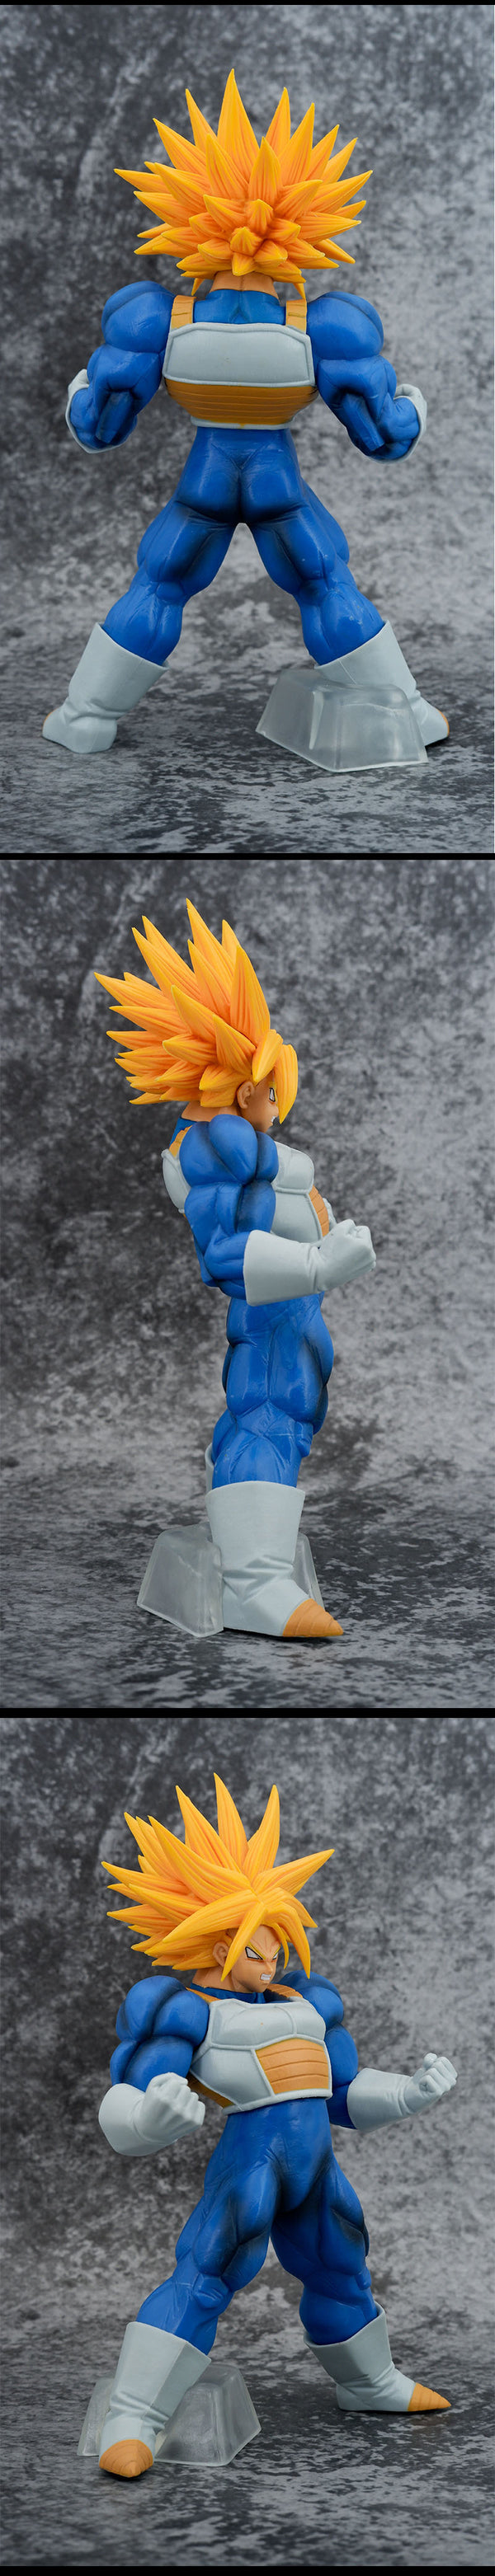 Figurine Trunks Super Saiyan 3 Dragon Ball Z